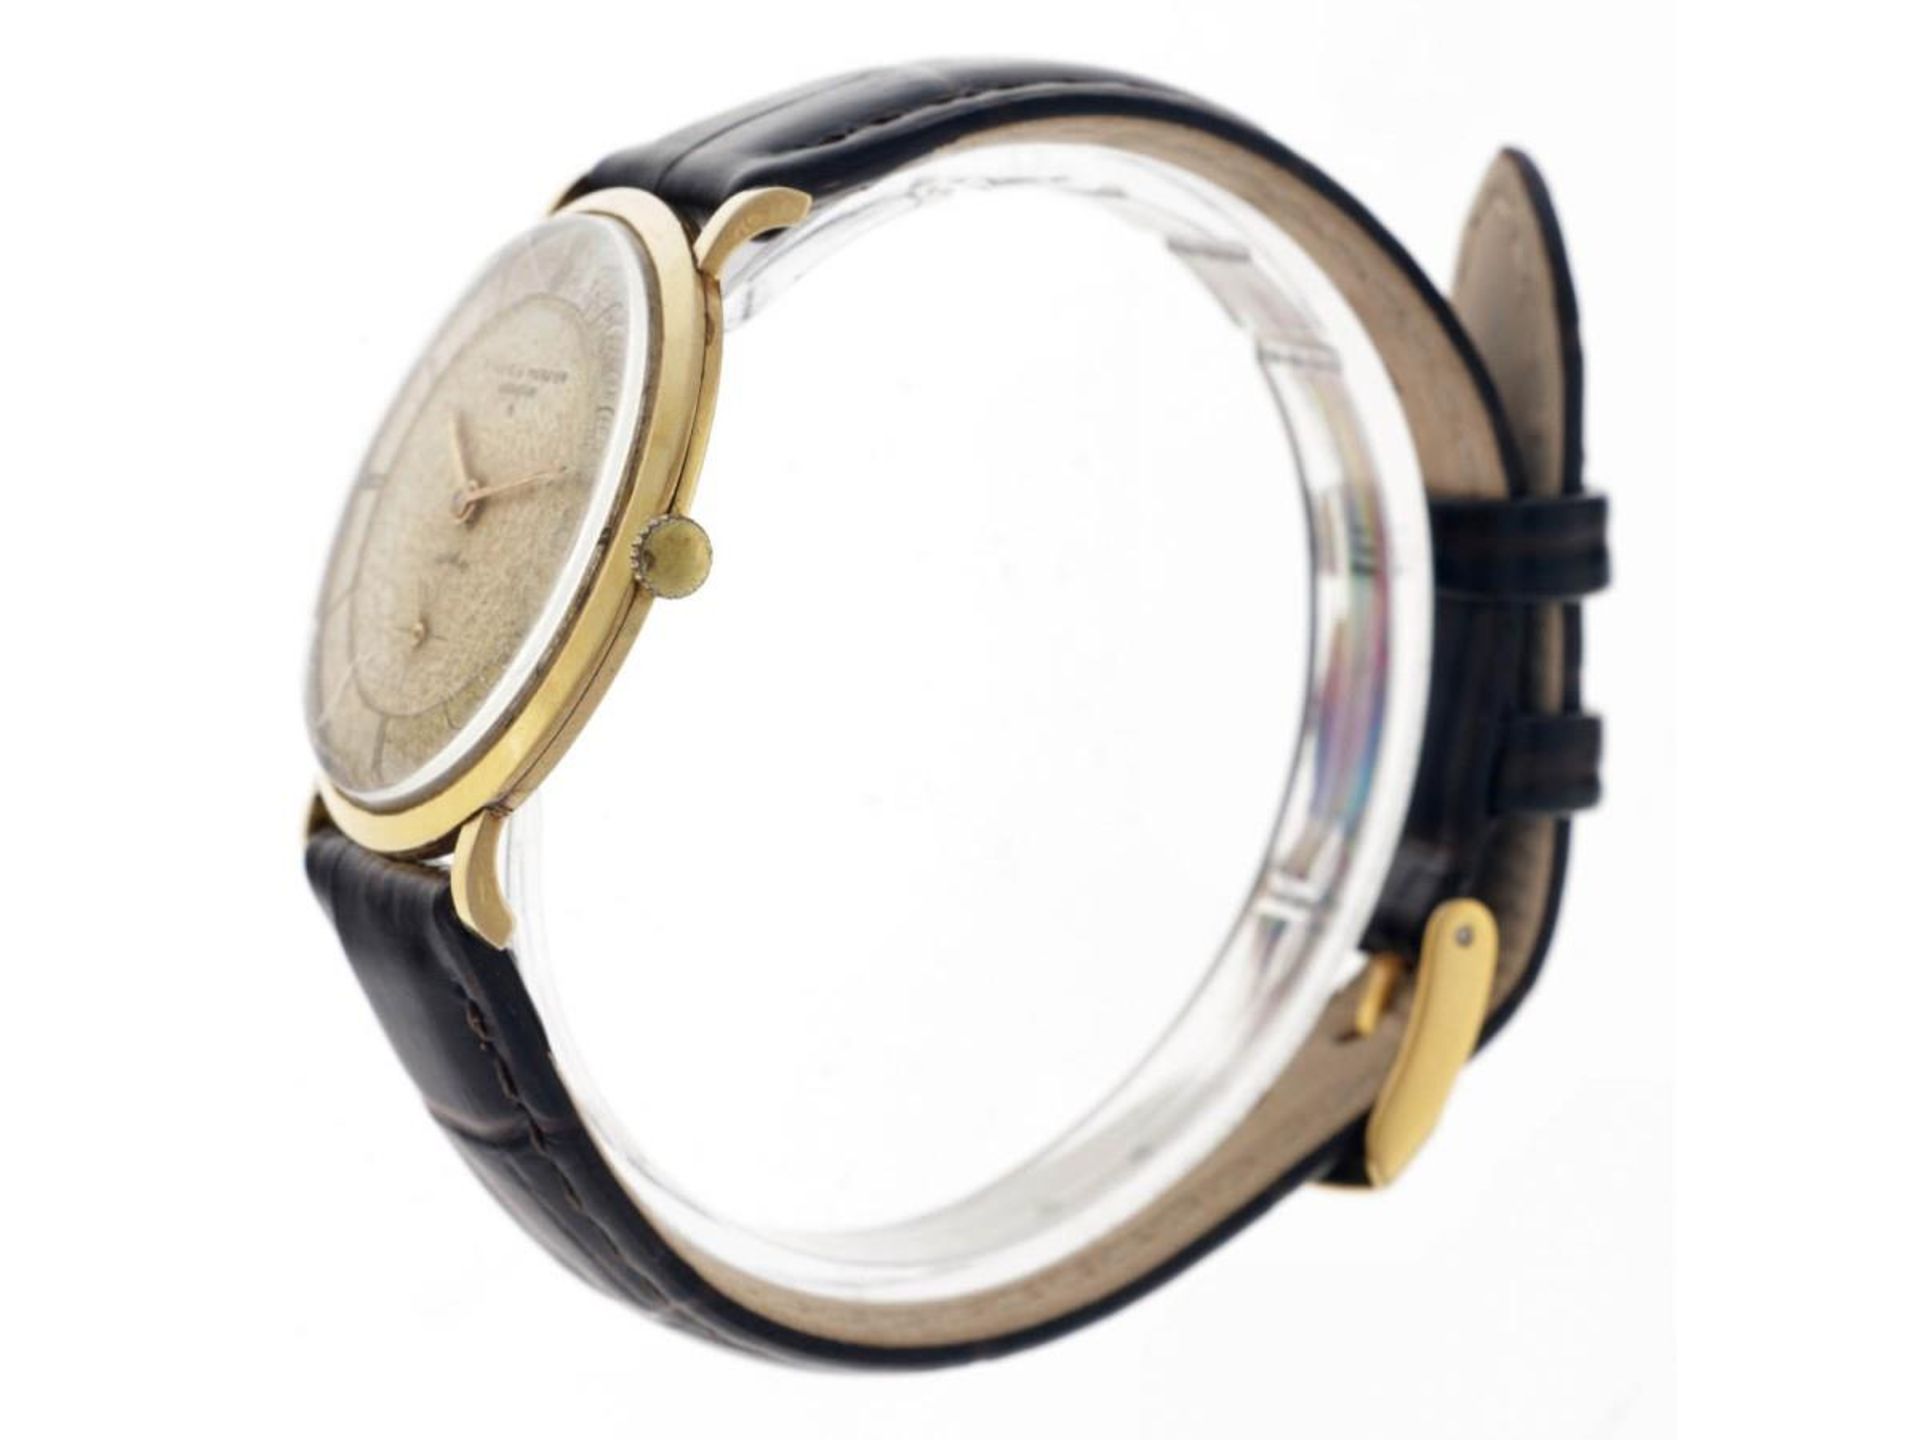 Baume & Mercier vintage 3568 - Men's watch - approx. 1950. - Image 9 of 12